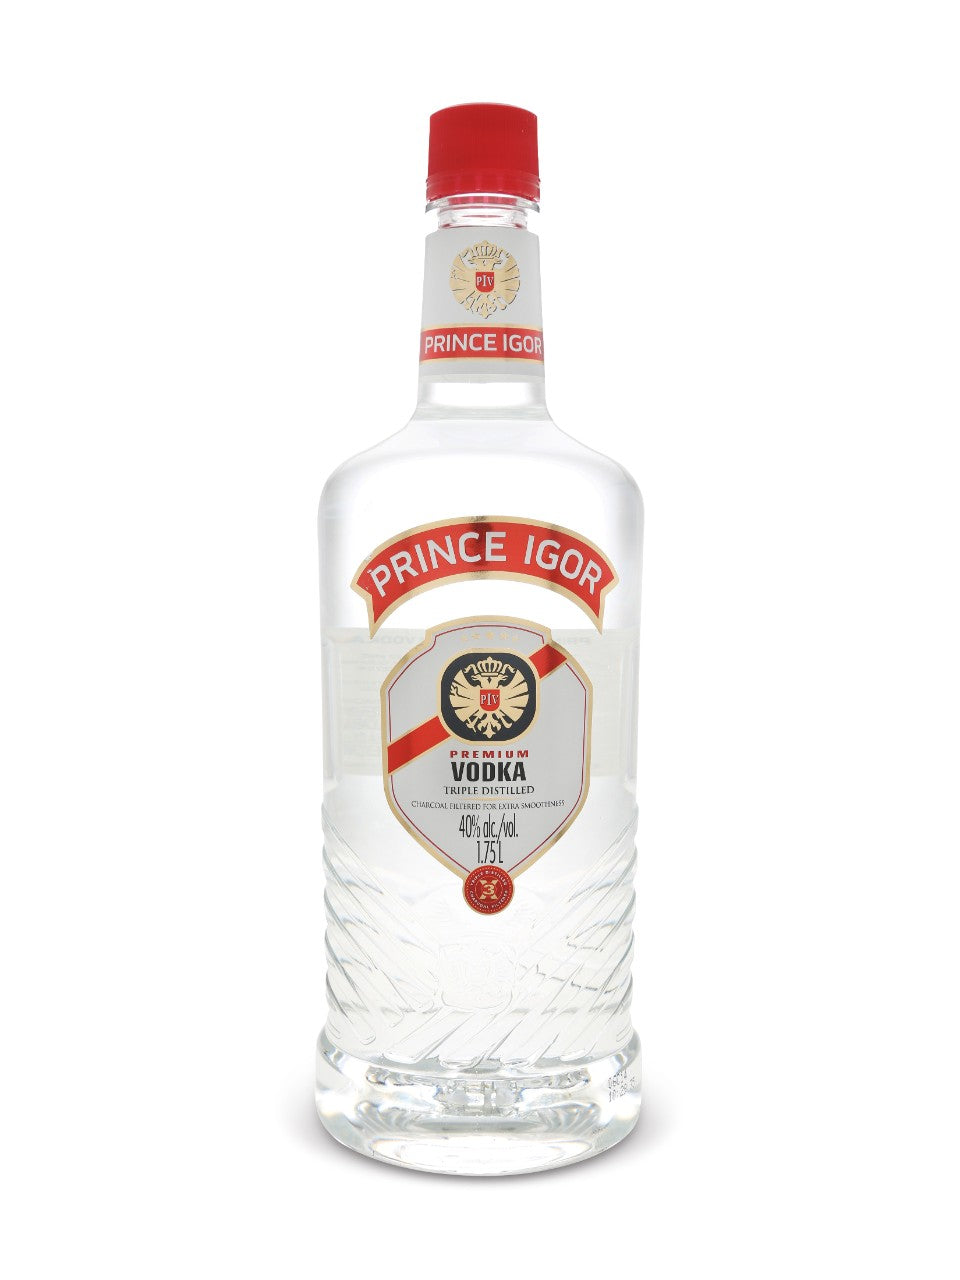 Prince Igor Vodka (PET) 1750 mL bottle